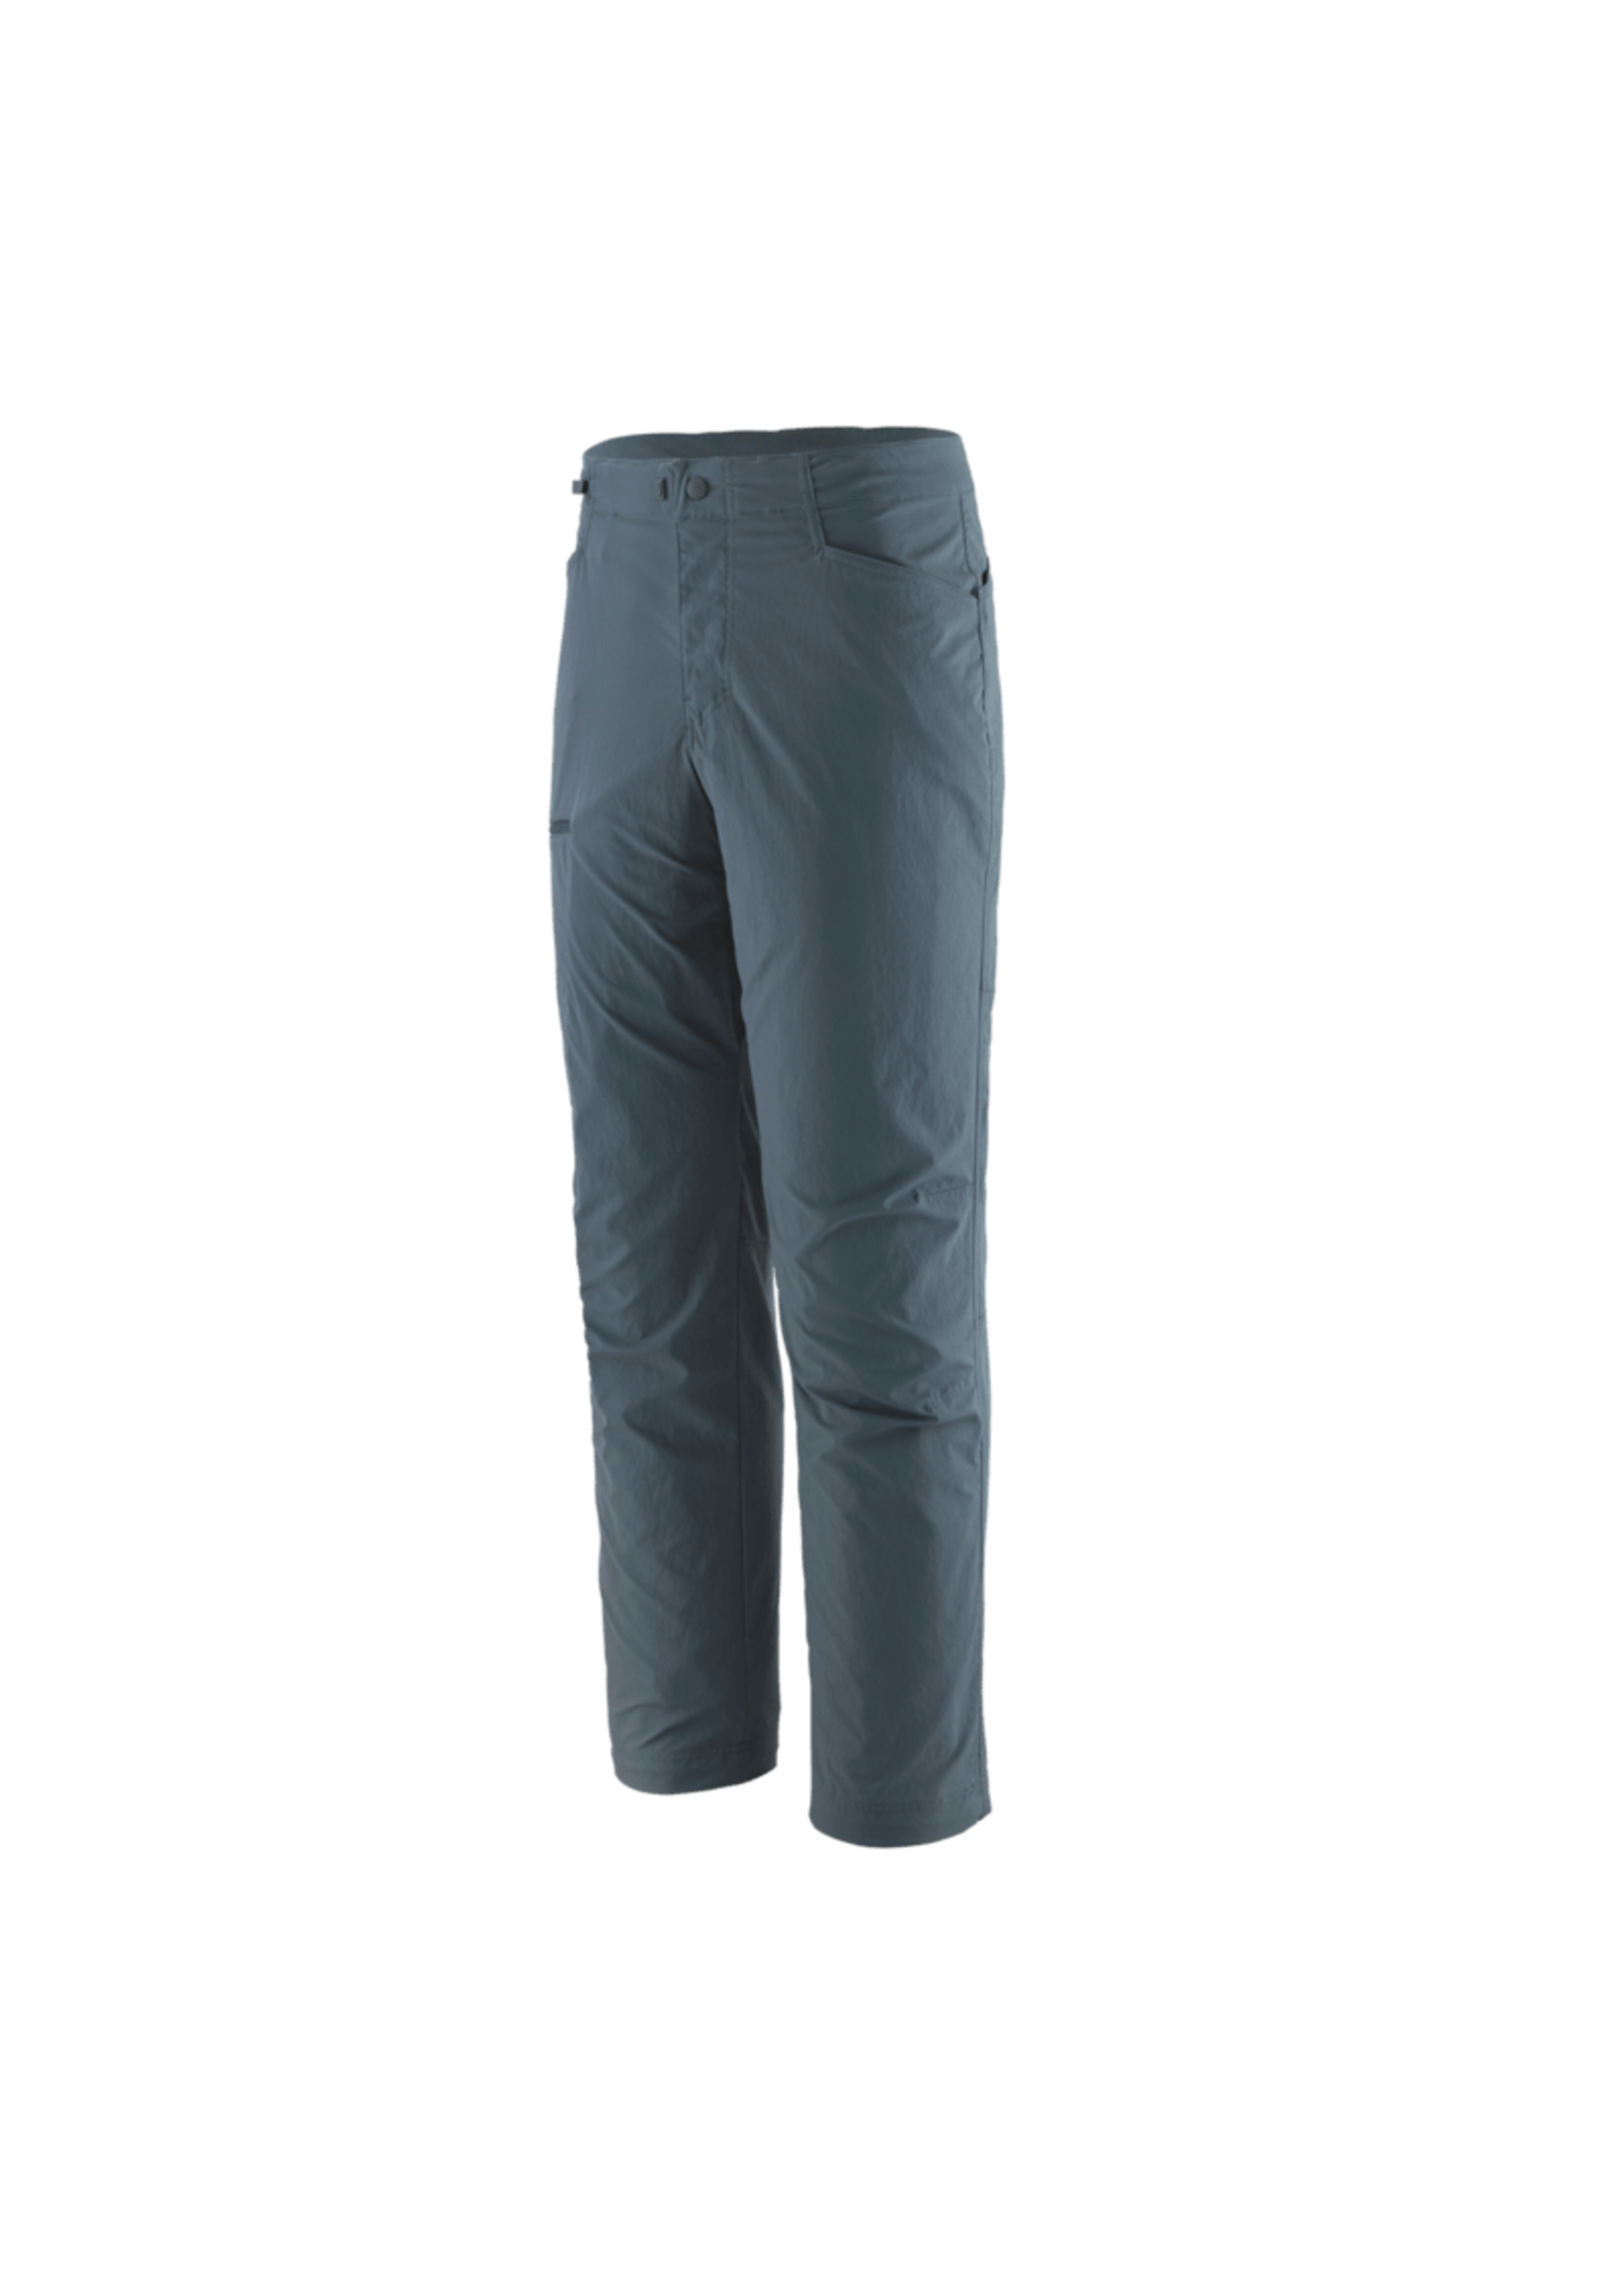 Patagonia Men's RPS Rock Pants - Reg - Plume Grey